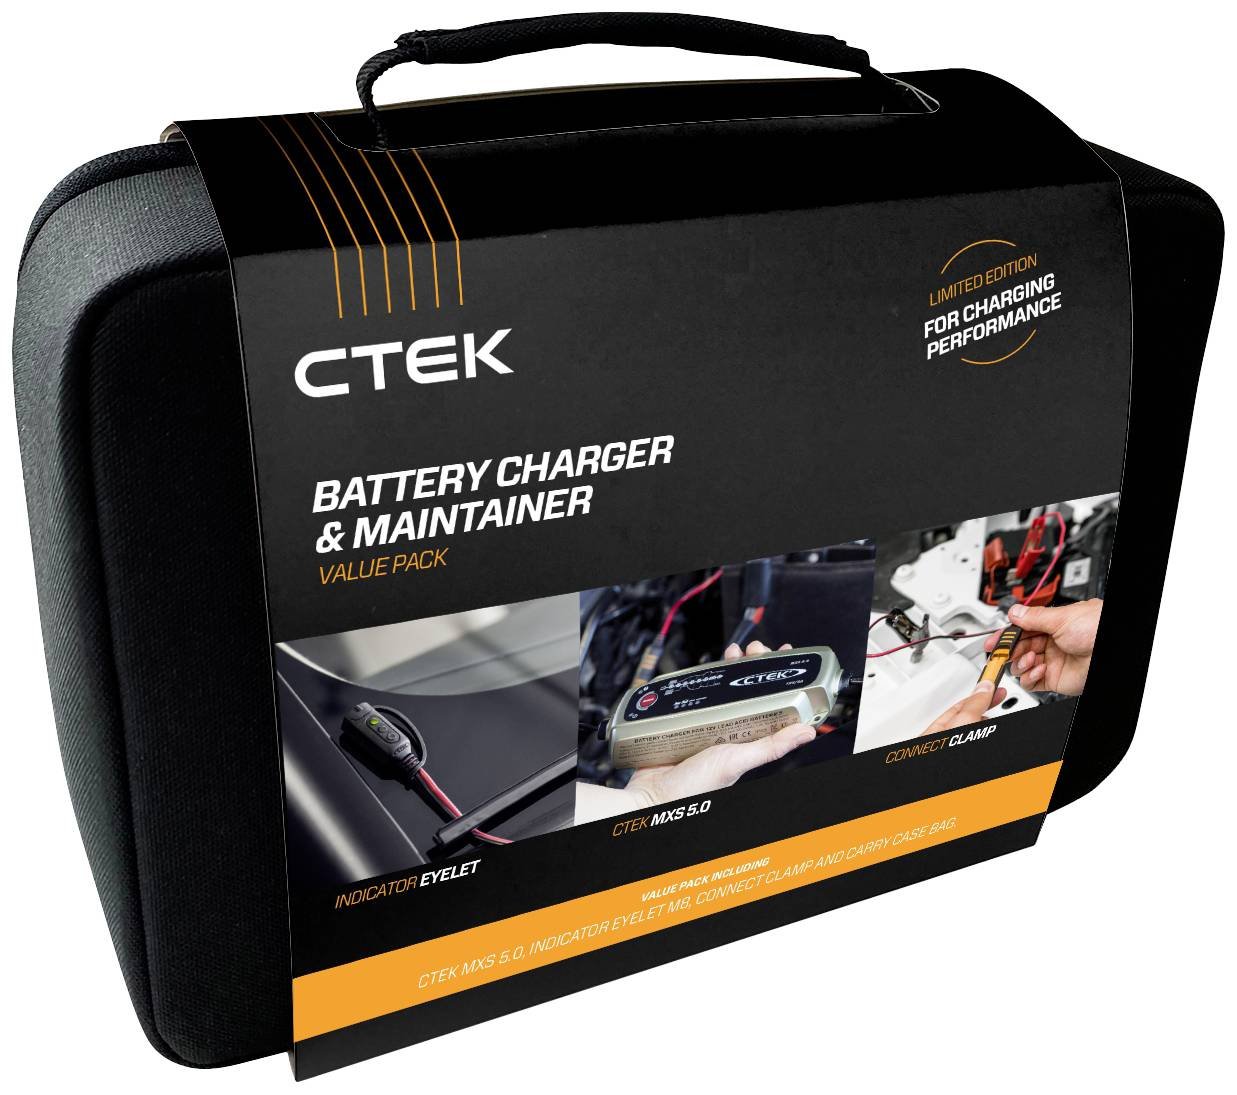 CTEK Smart Battery Charger from Sweden